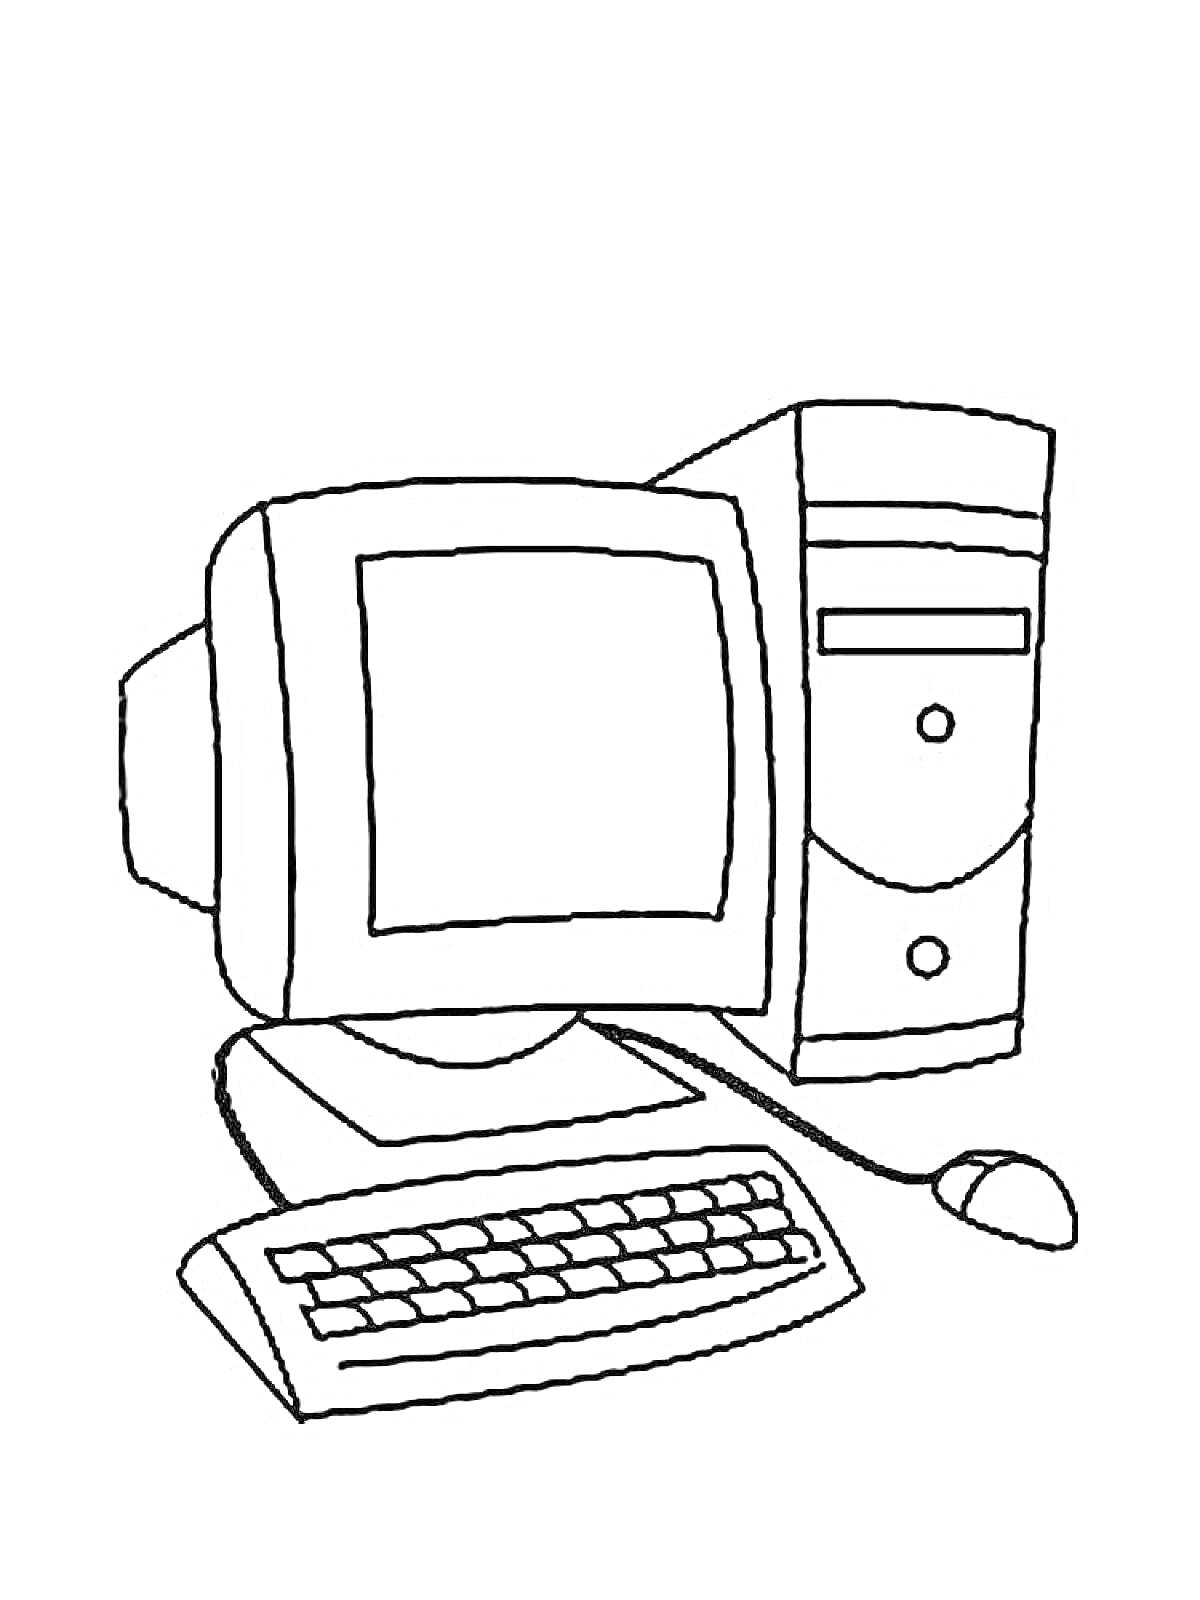 На раскраске изображено: Компьютер, Монитор, Клавиатура, Техника, Электроника, Мышь